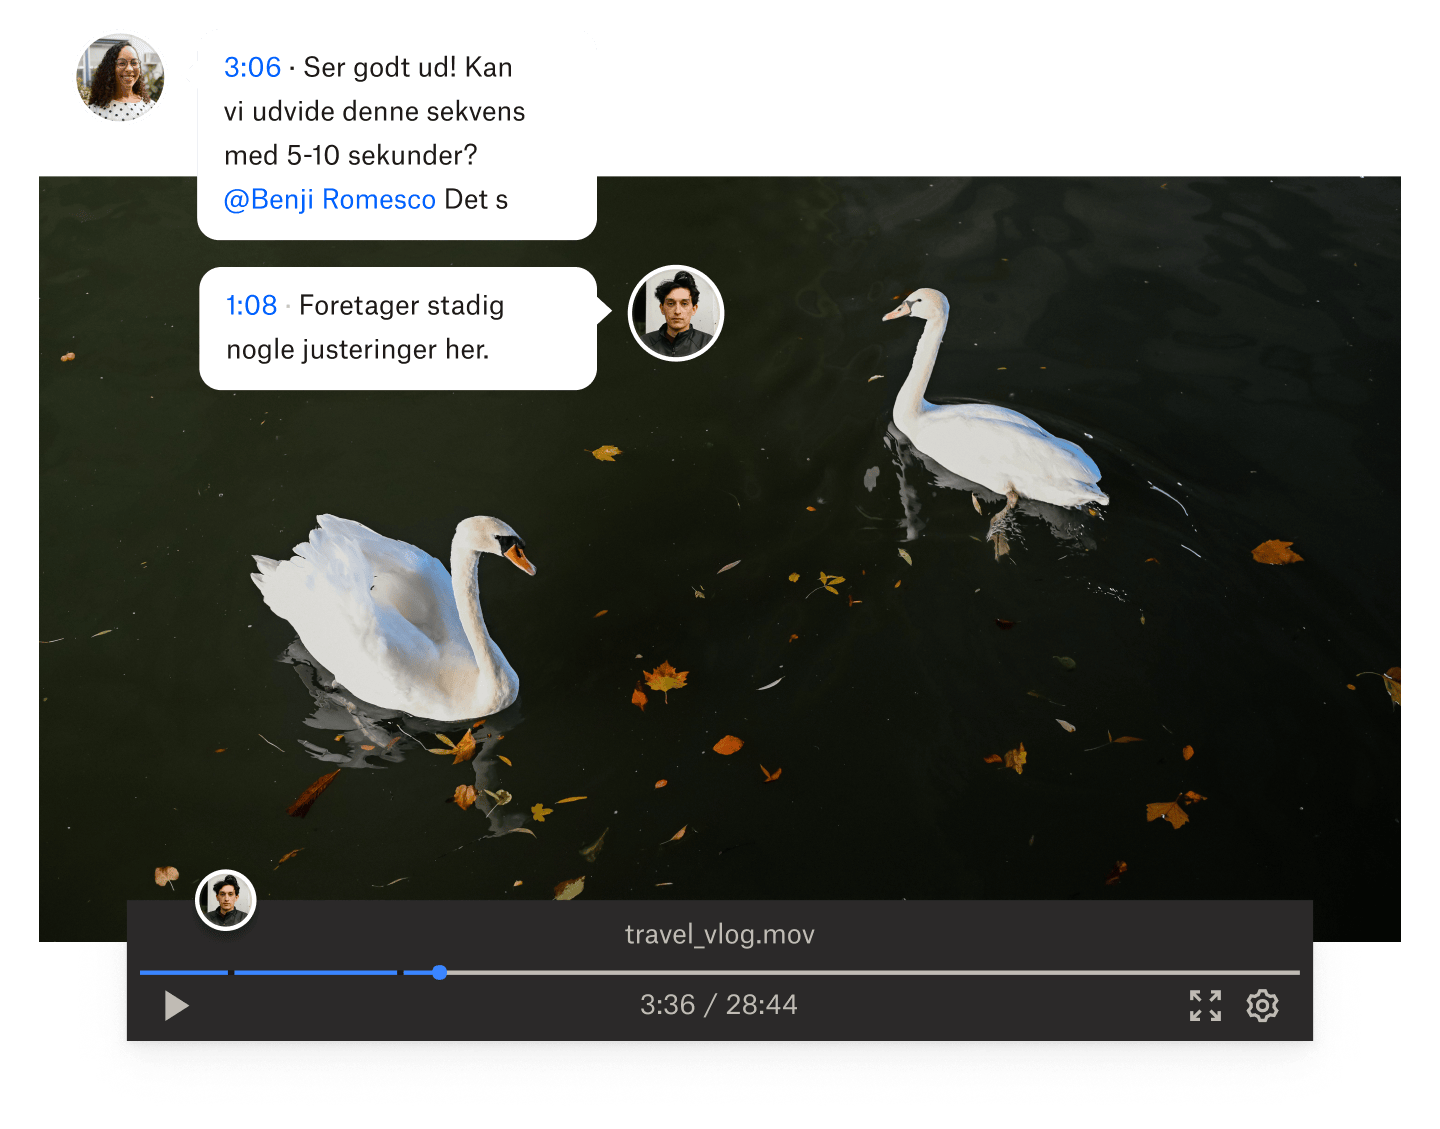 Et stillbillede fra en video med to svaner i vandet med tidsstemplede kommentarer overlejret på videoen